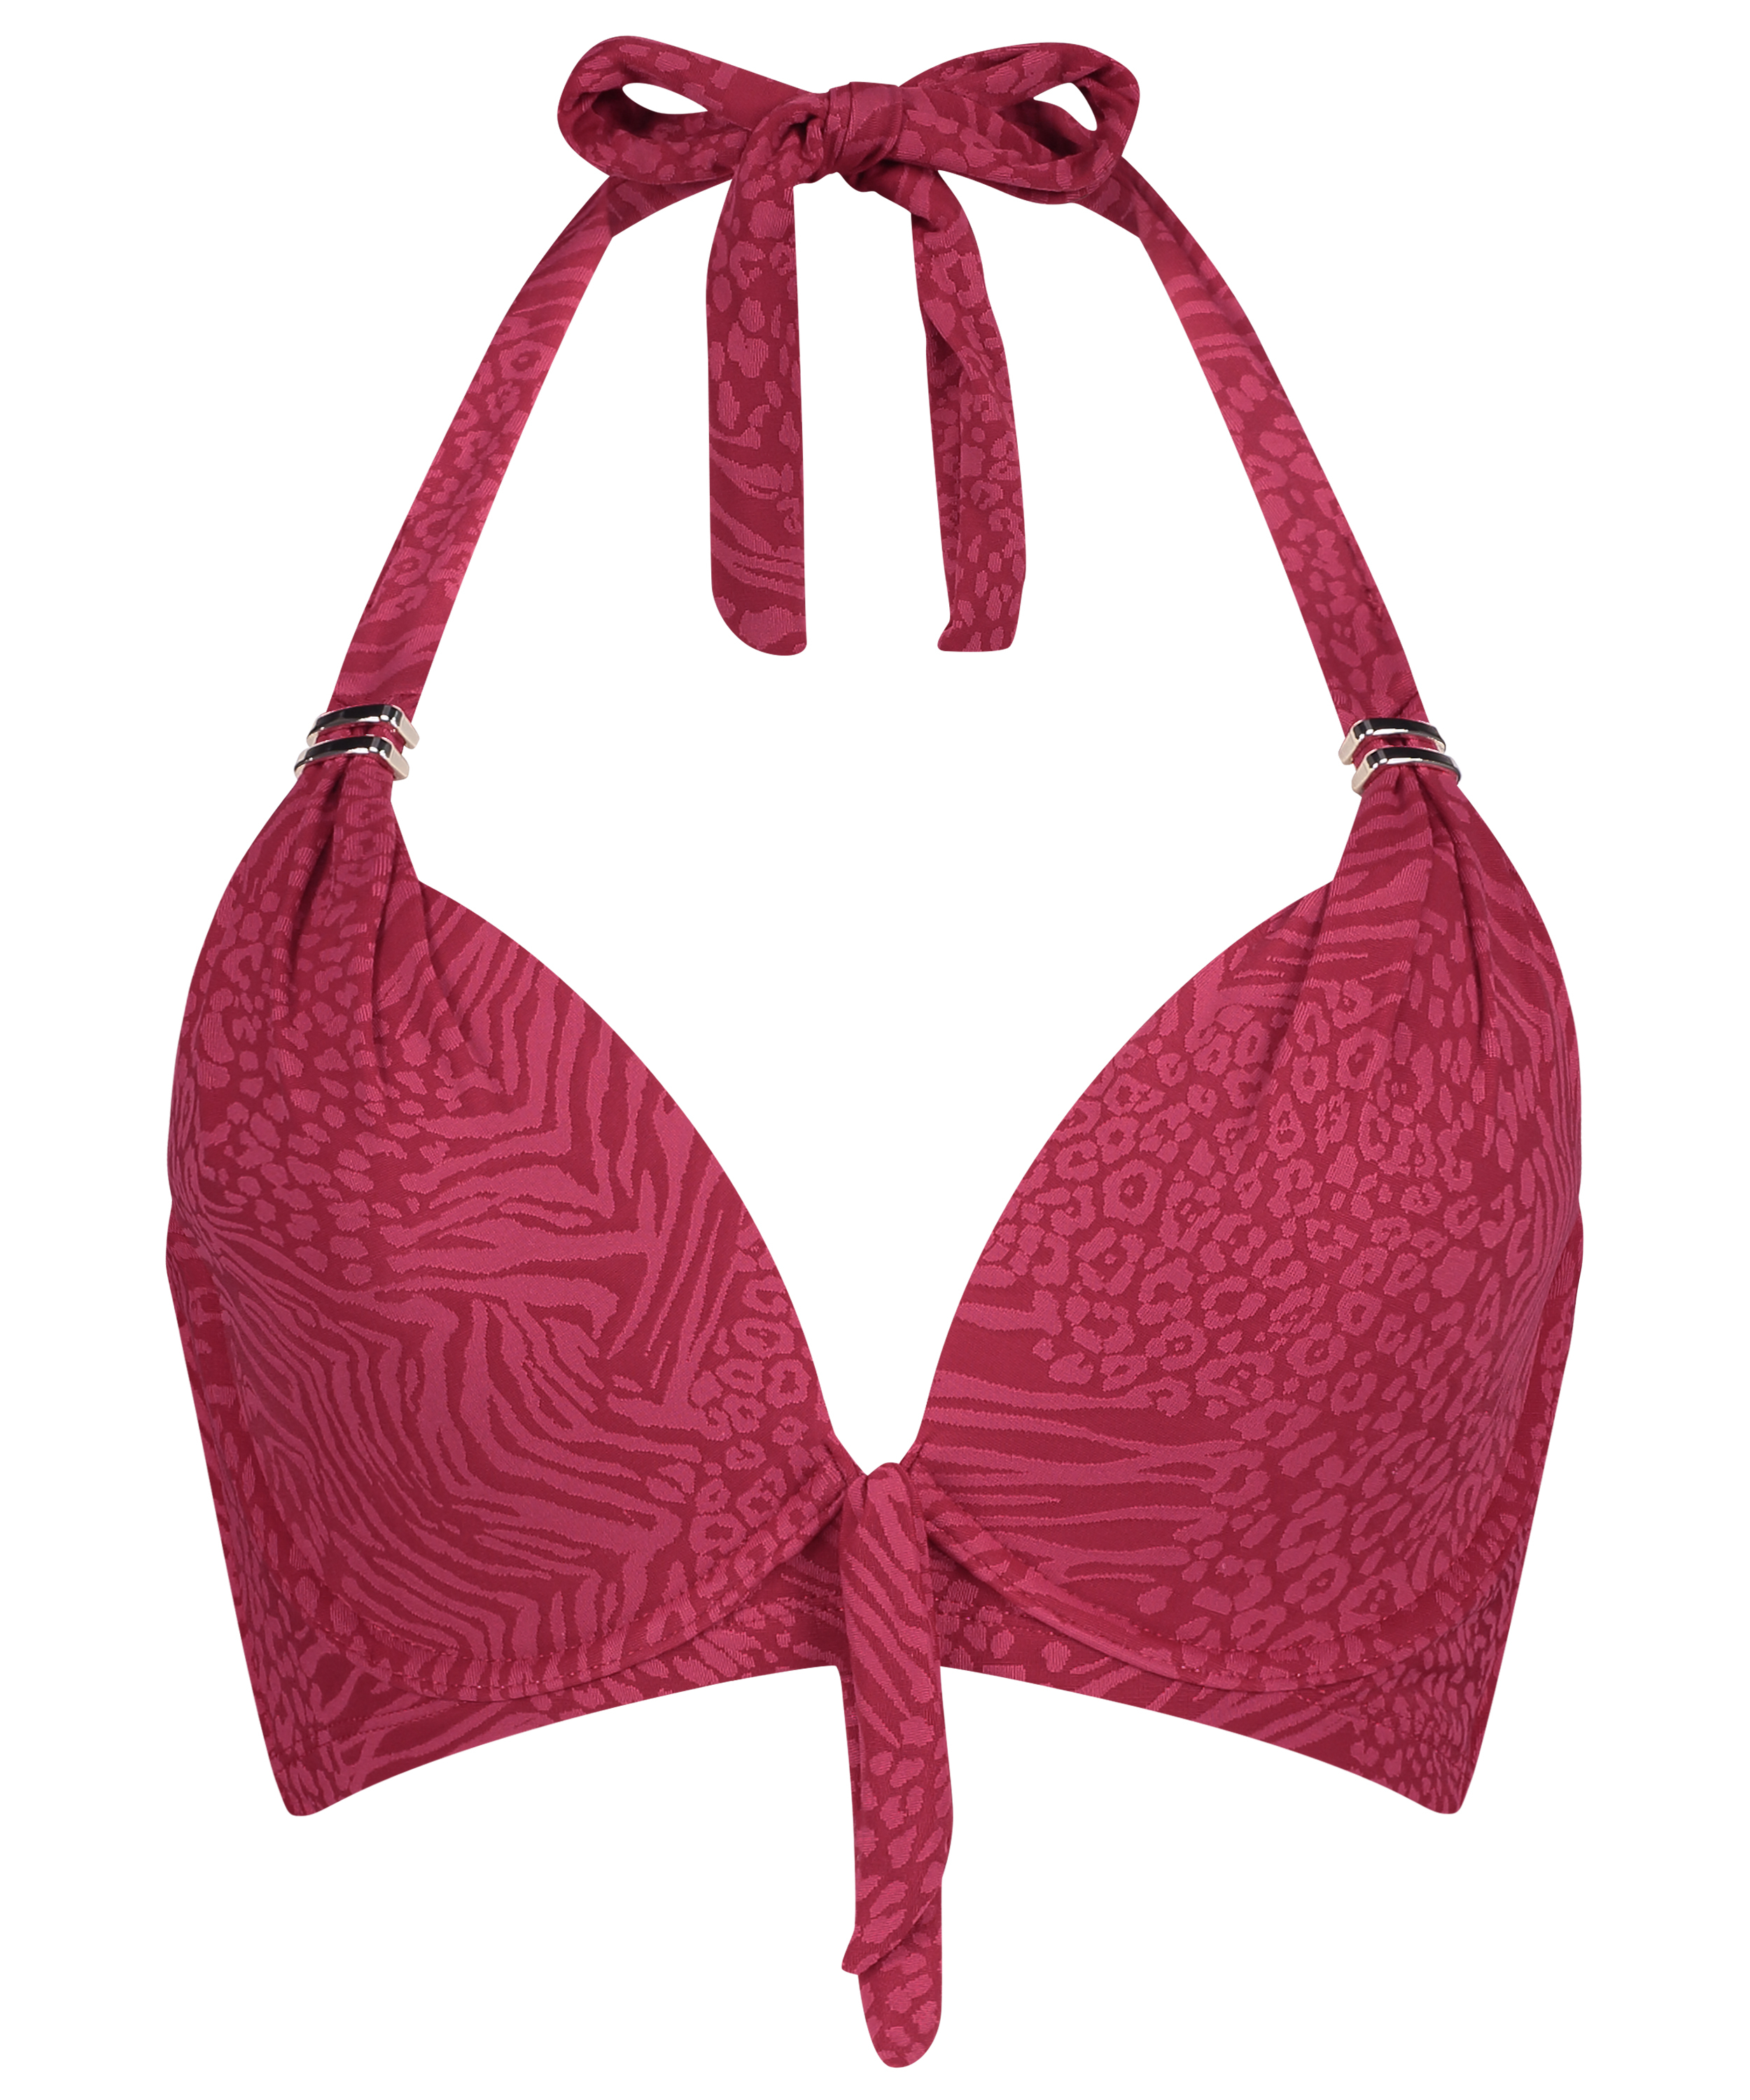 Vorgeformtes Bügel-Bikini-Top Kai Cup E +, Rot, main